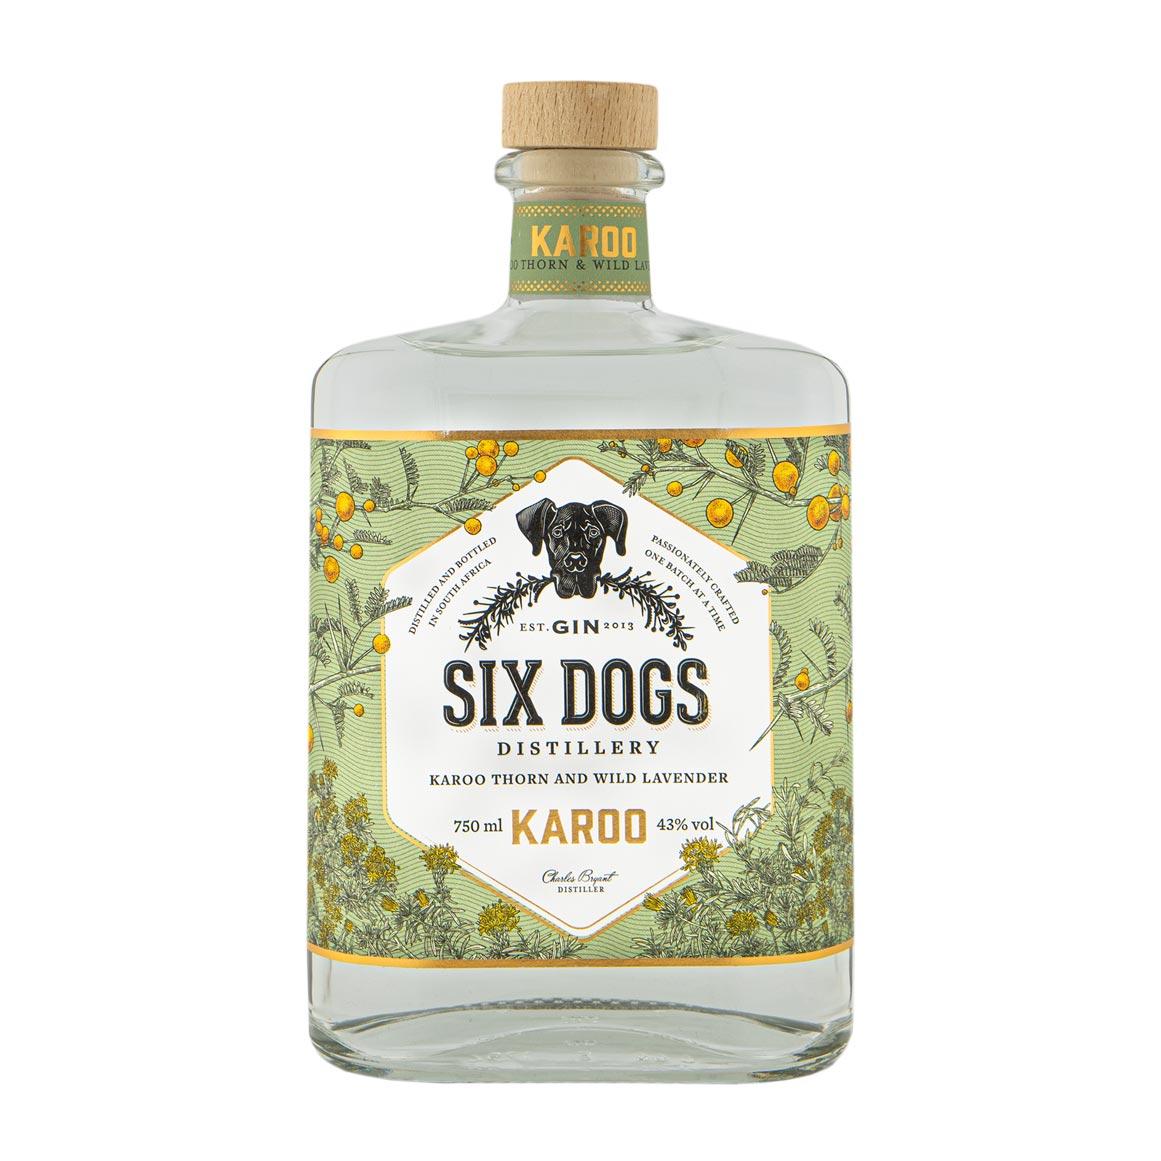 Six Dogs Karoo Gin 750 ml